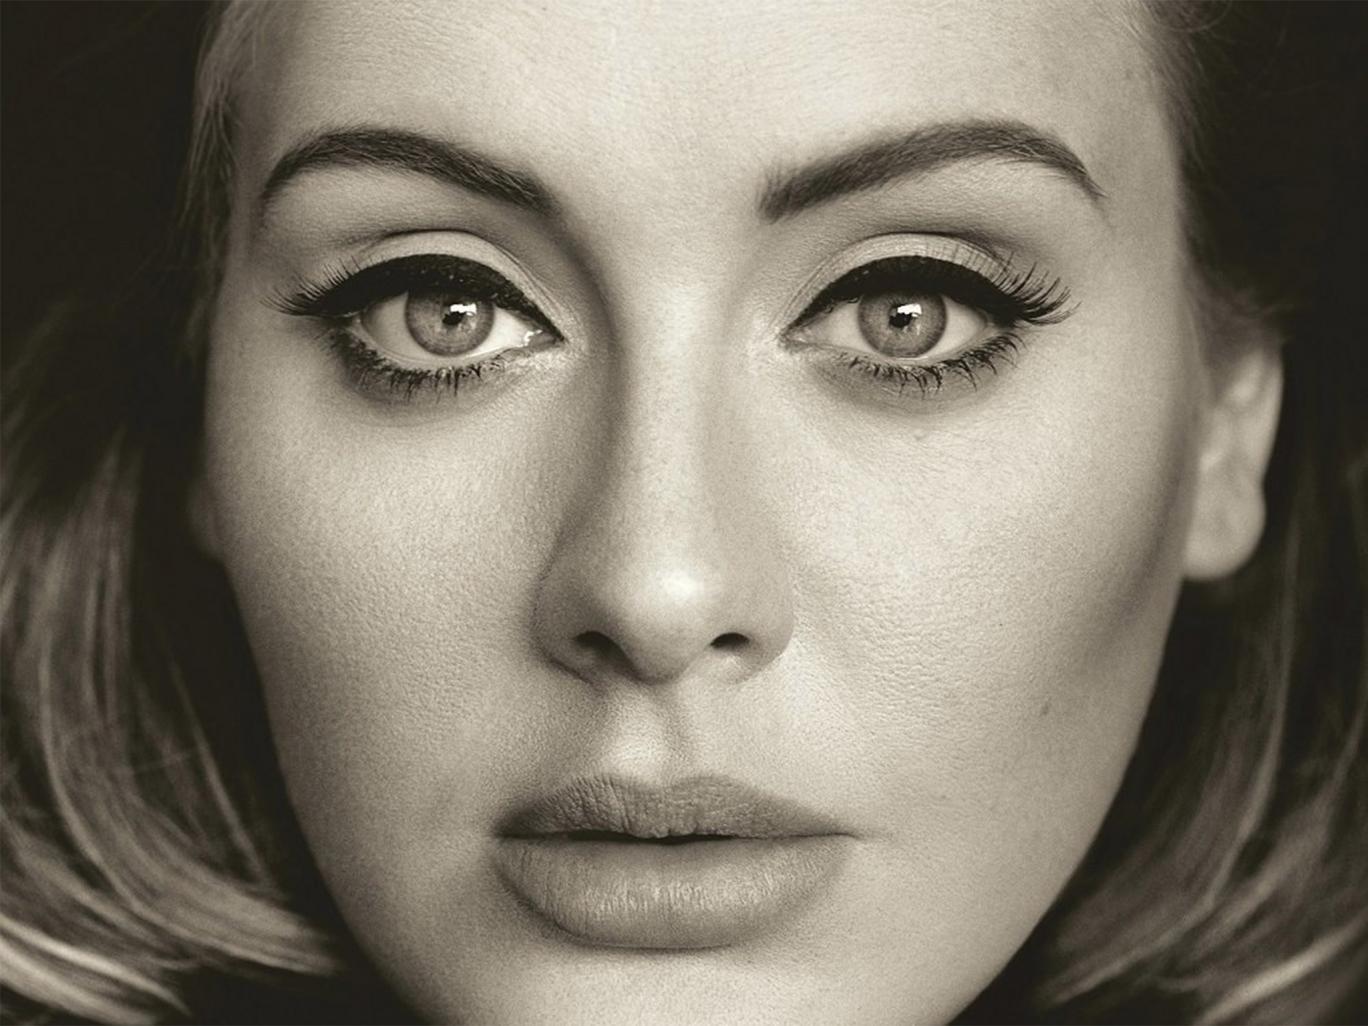 &#13;
Album cover for Adele's 25&#13;